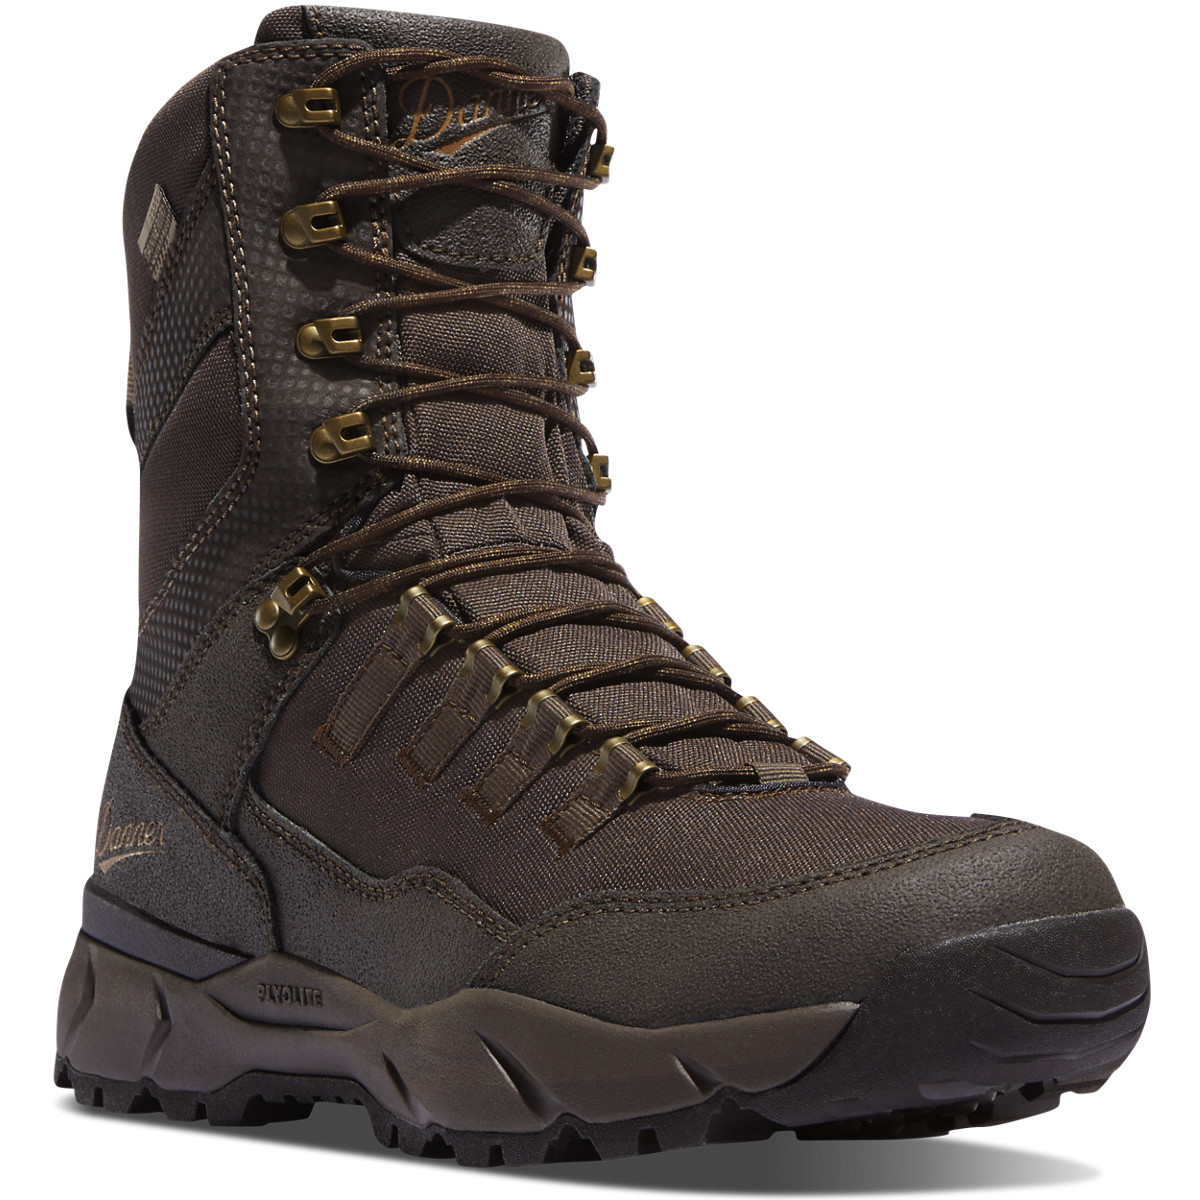 Danner Mens Vital 400G Hunting Boots Dark Brown - SRK281436